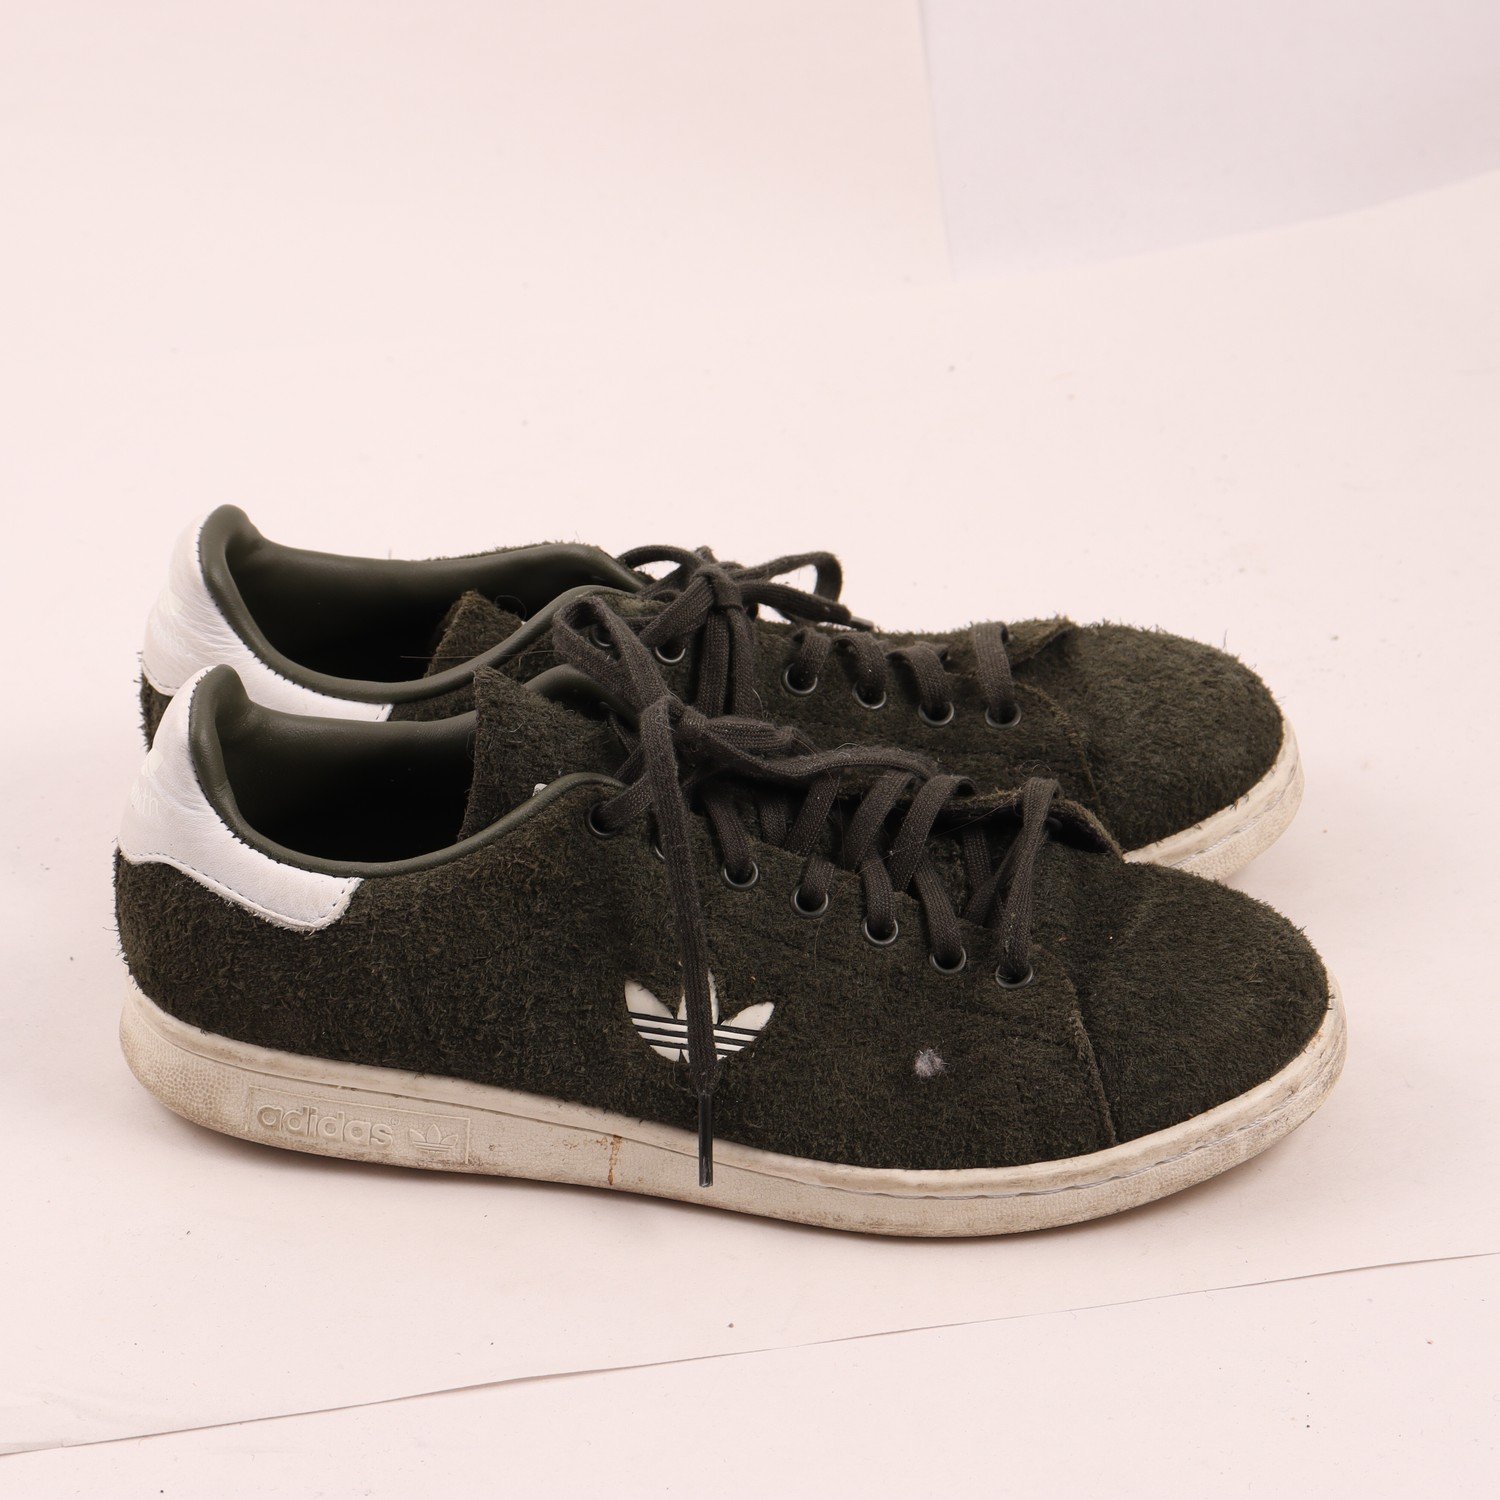 Sneakers, Adidas Stan Smith, stl. 39 1/3 (UK 6)